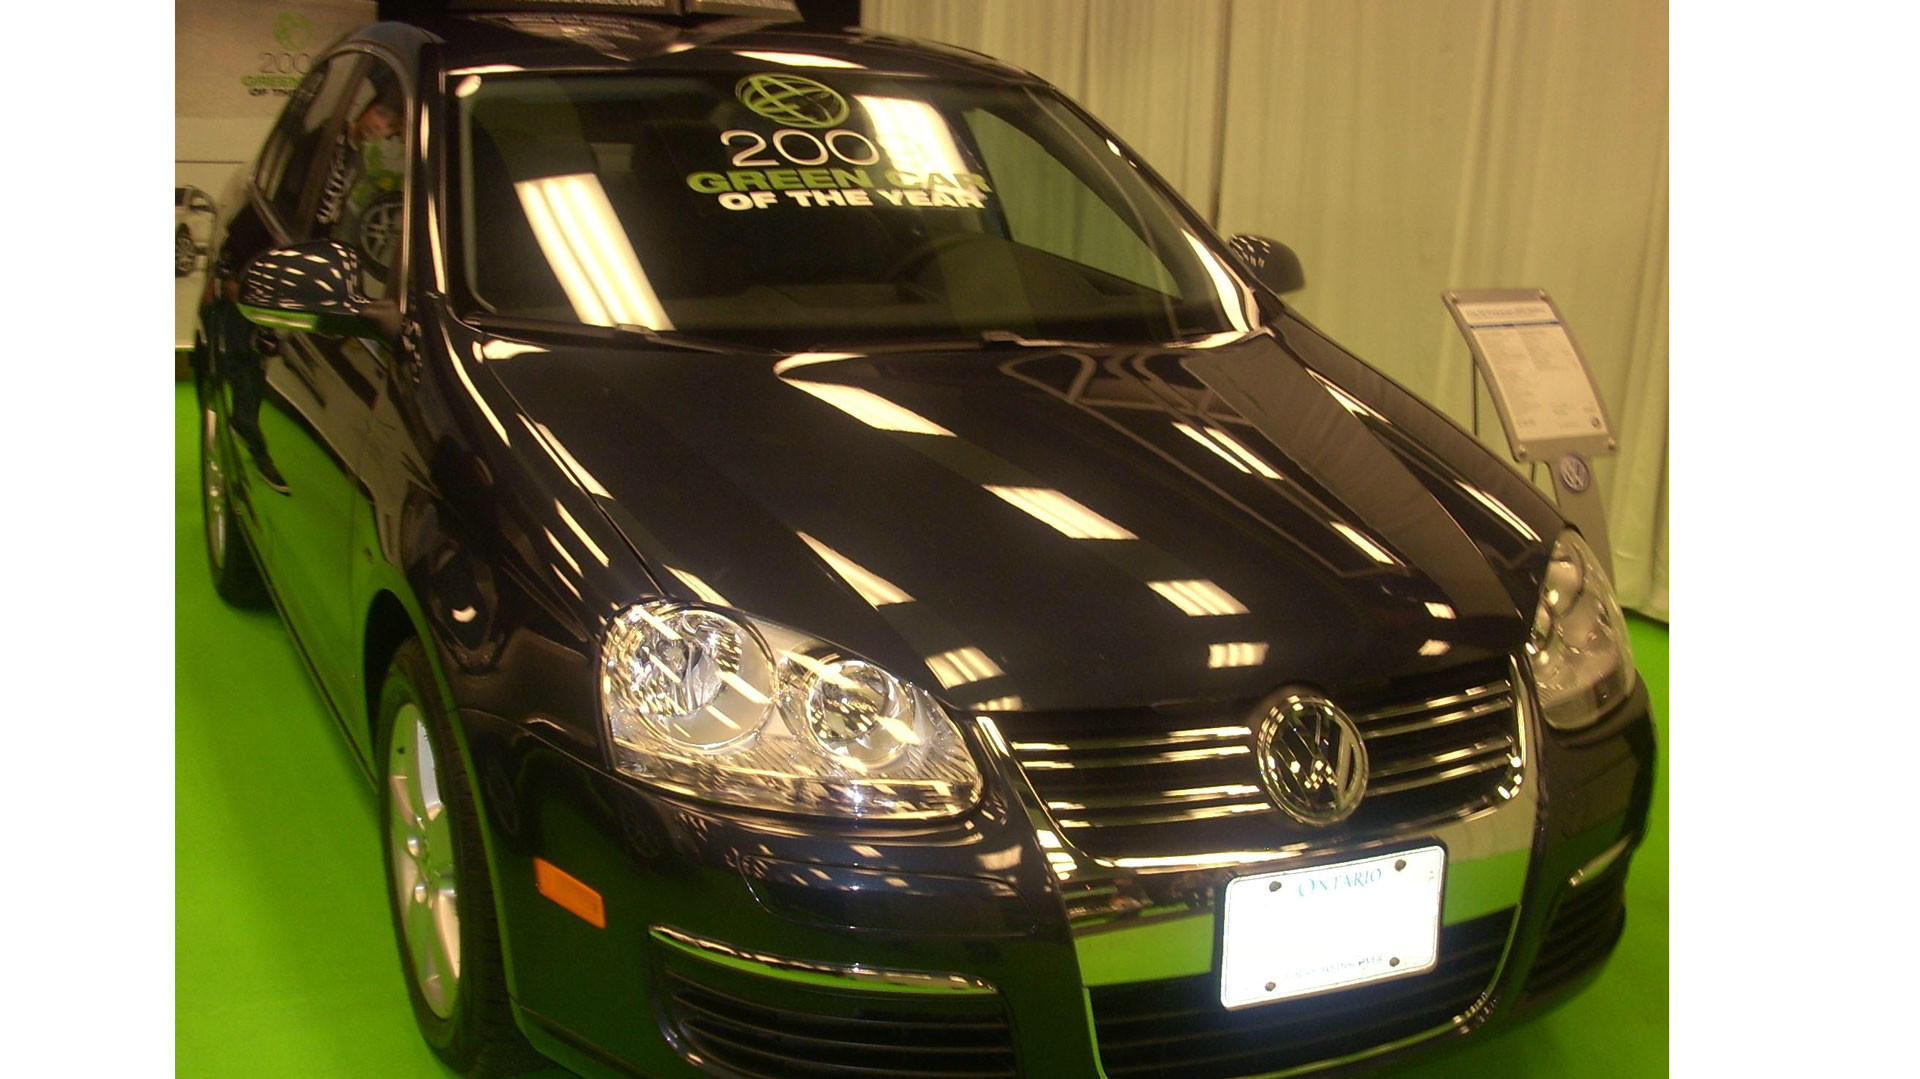 Volkswagen Jetta Diesel, 2009, получивший награду "Зелёный автомобиль года". Фото: © wikipedia.org